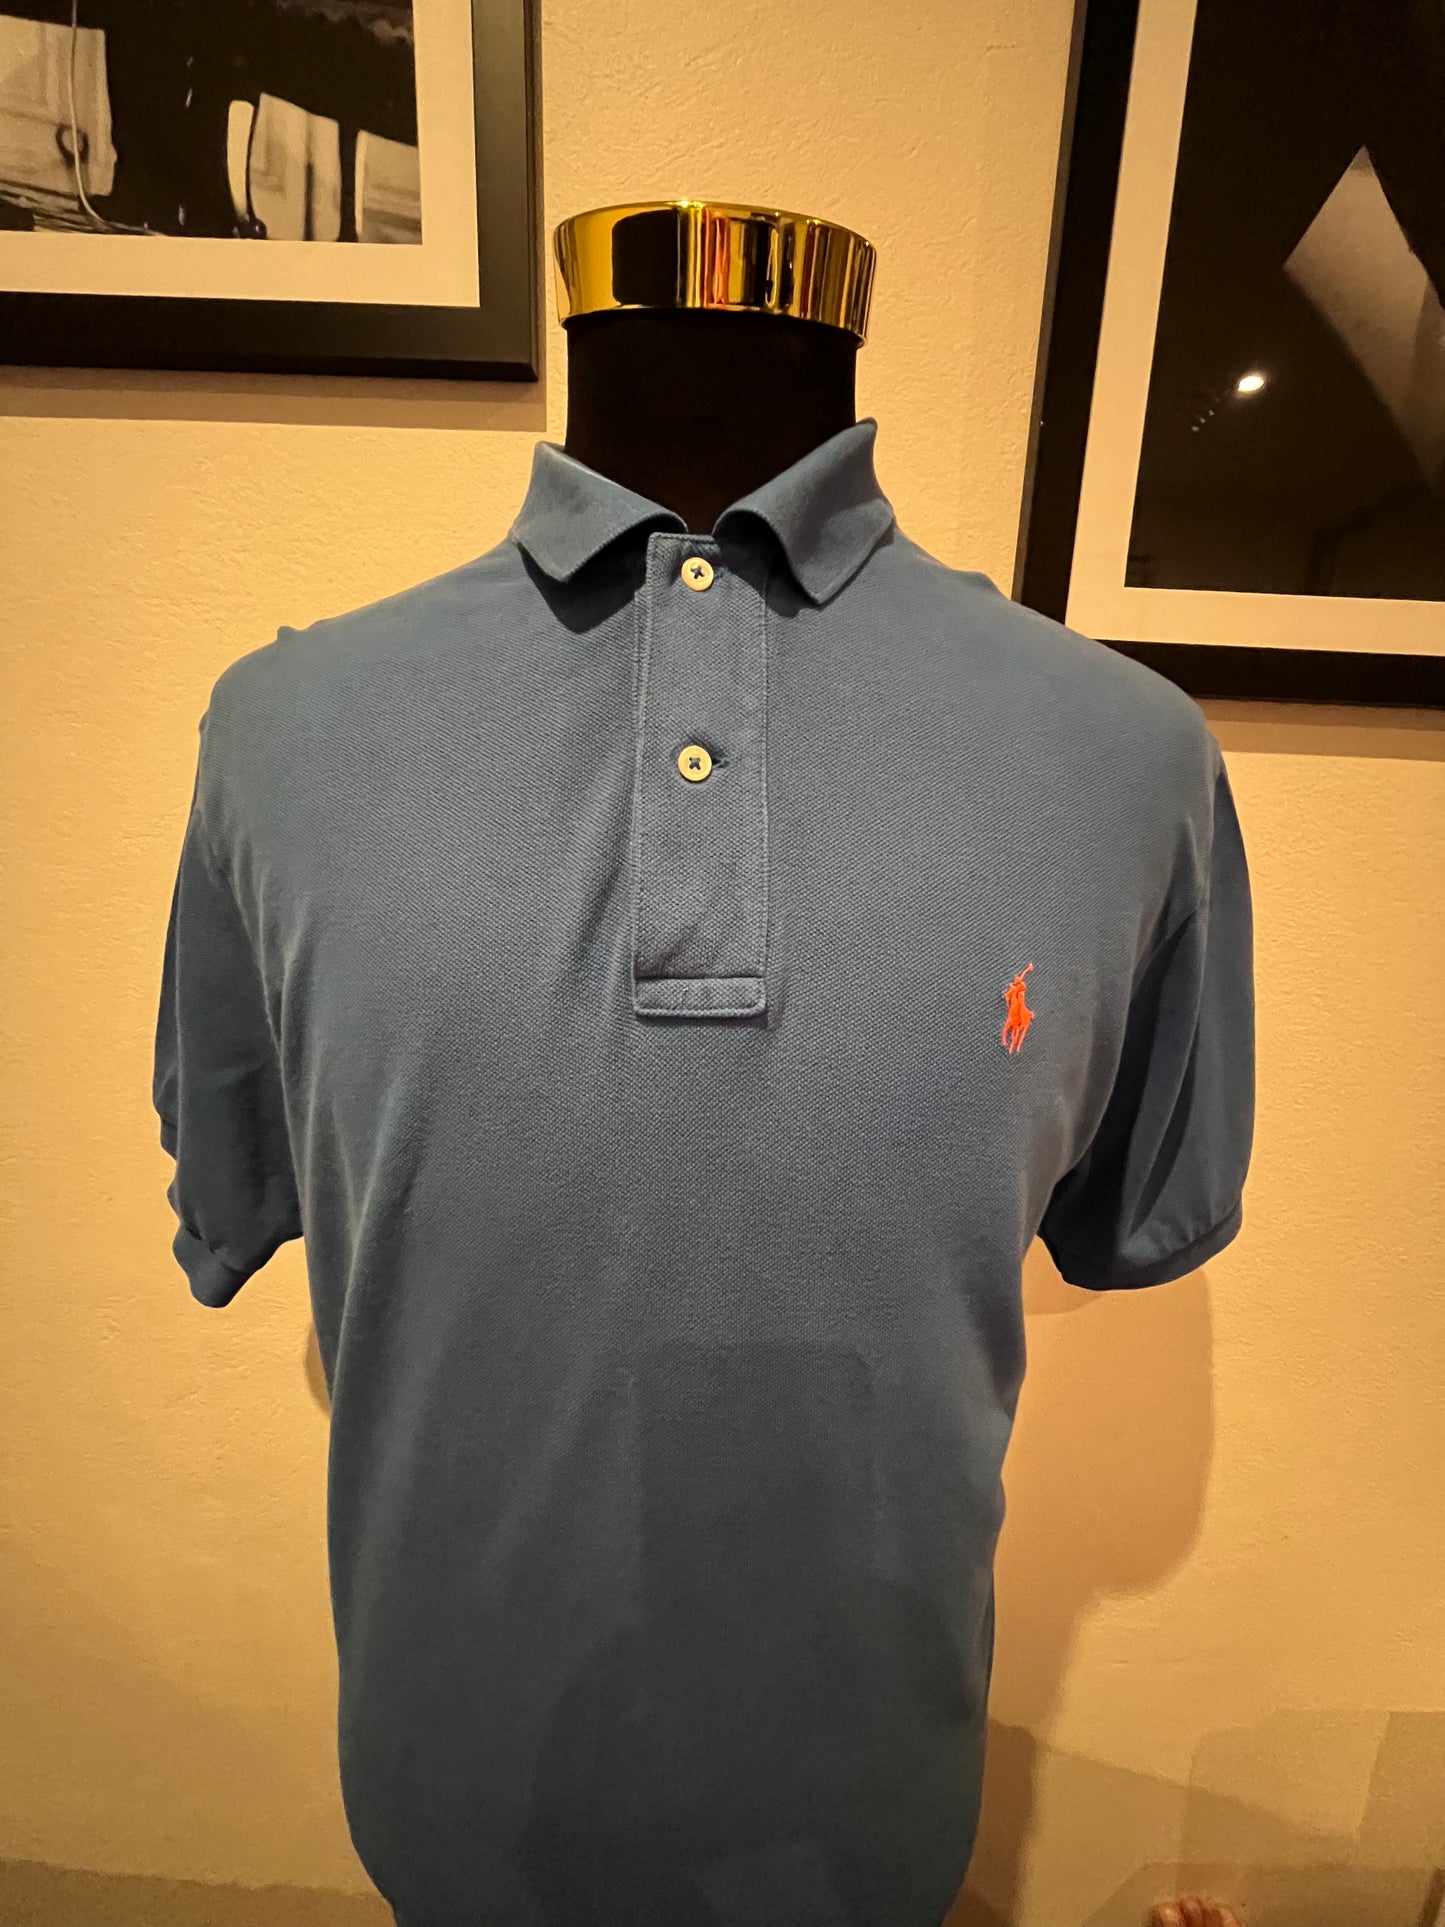 Ralph Lauren Blue Polo Shirt Size Large Classic Fit with Orange Polo Motif